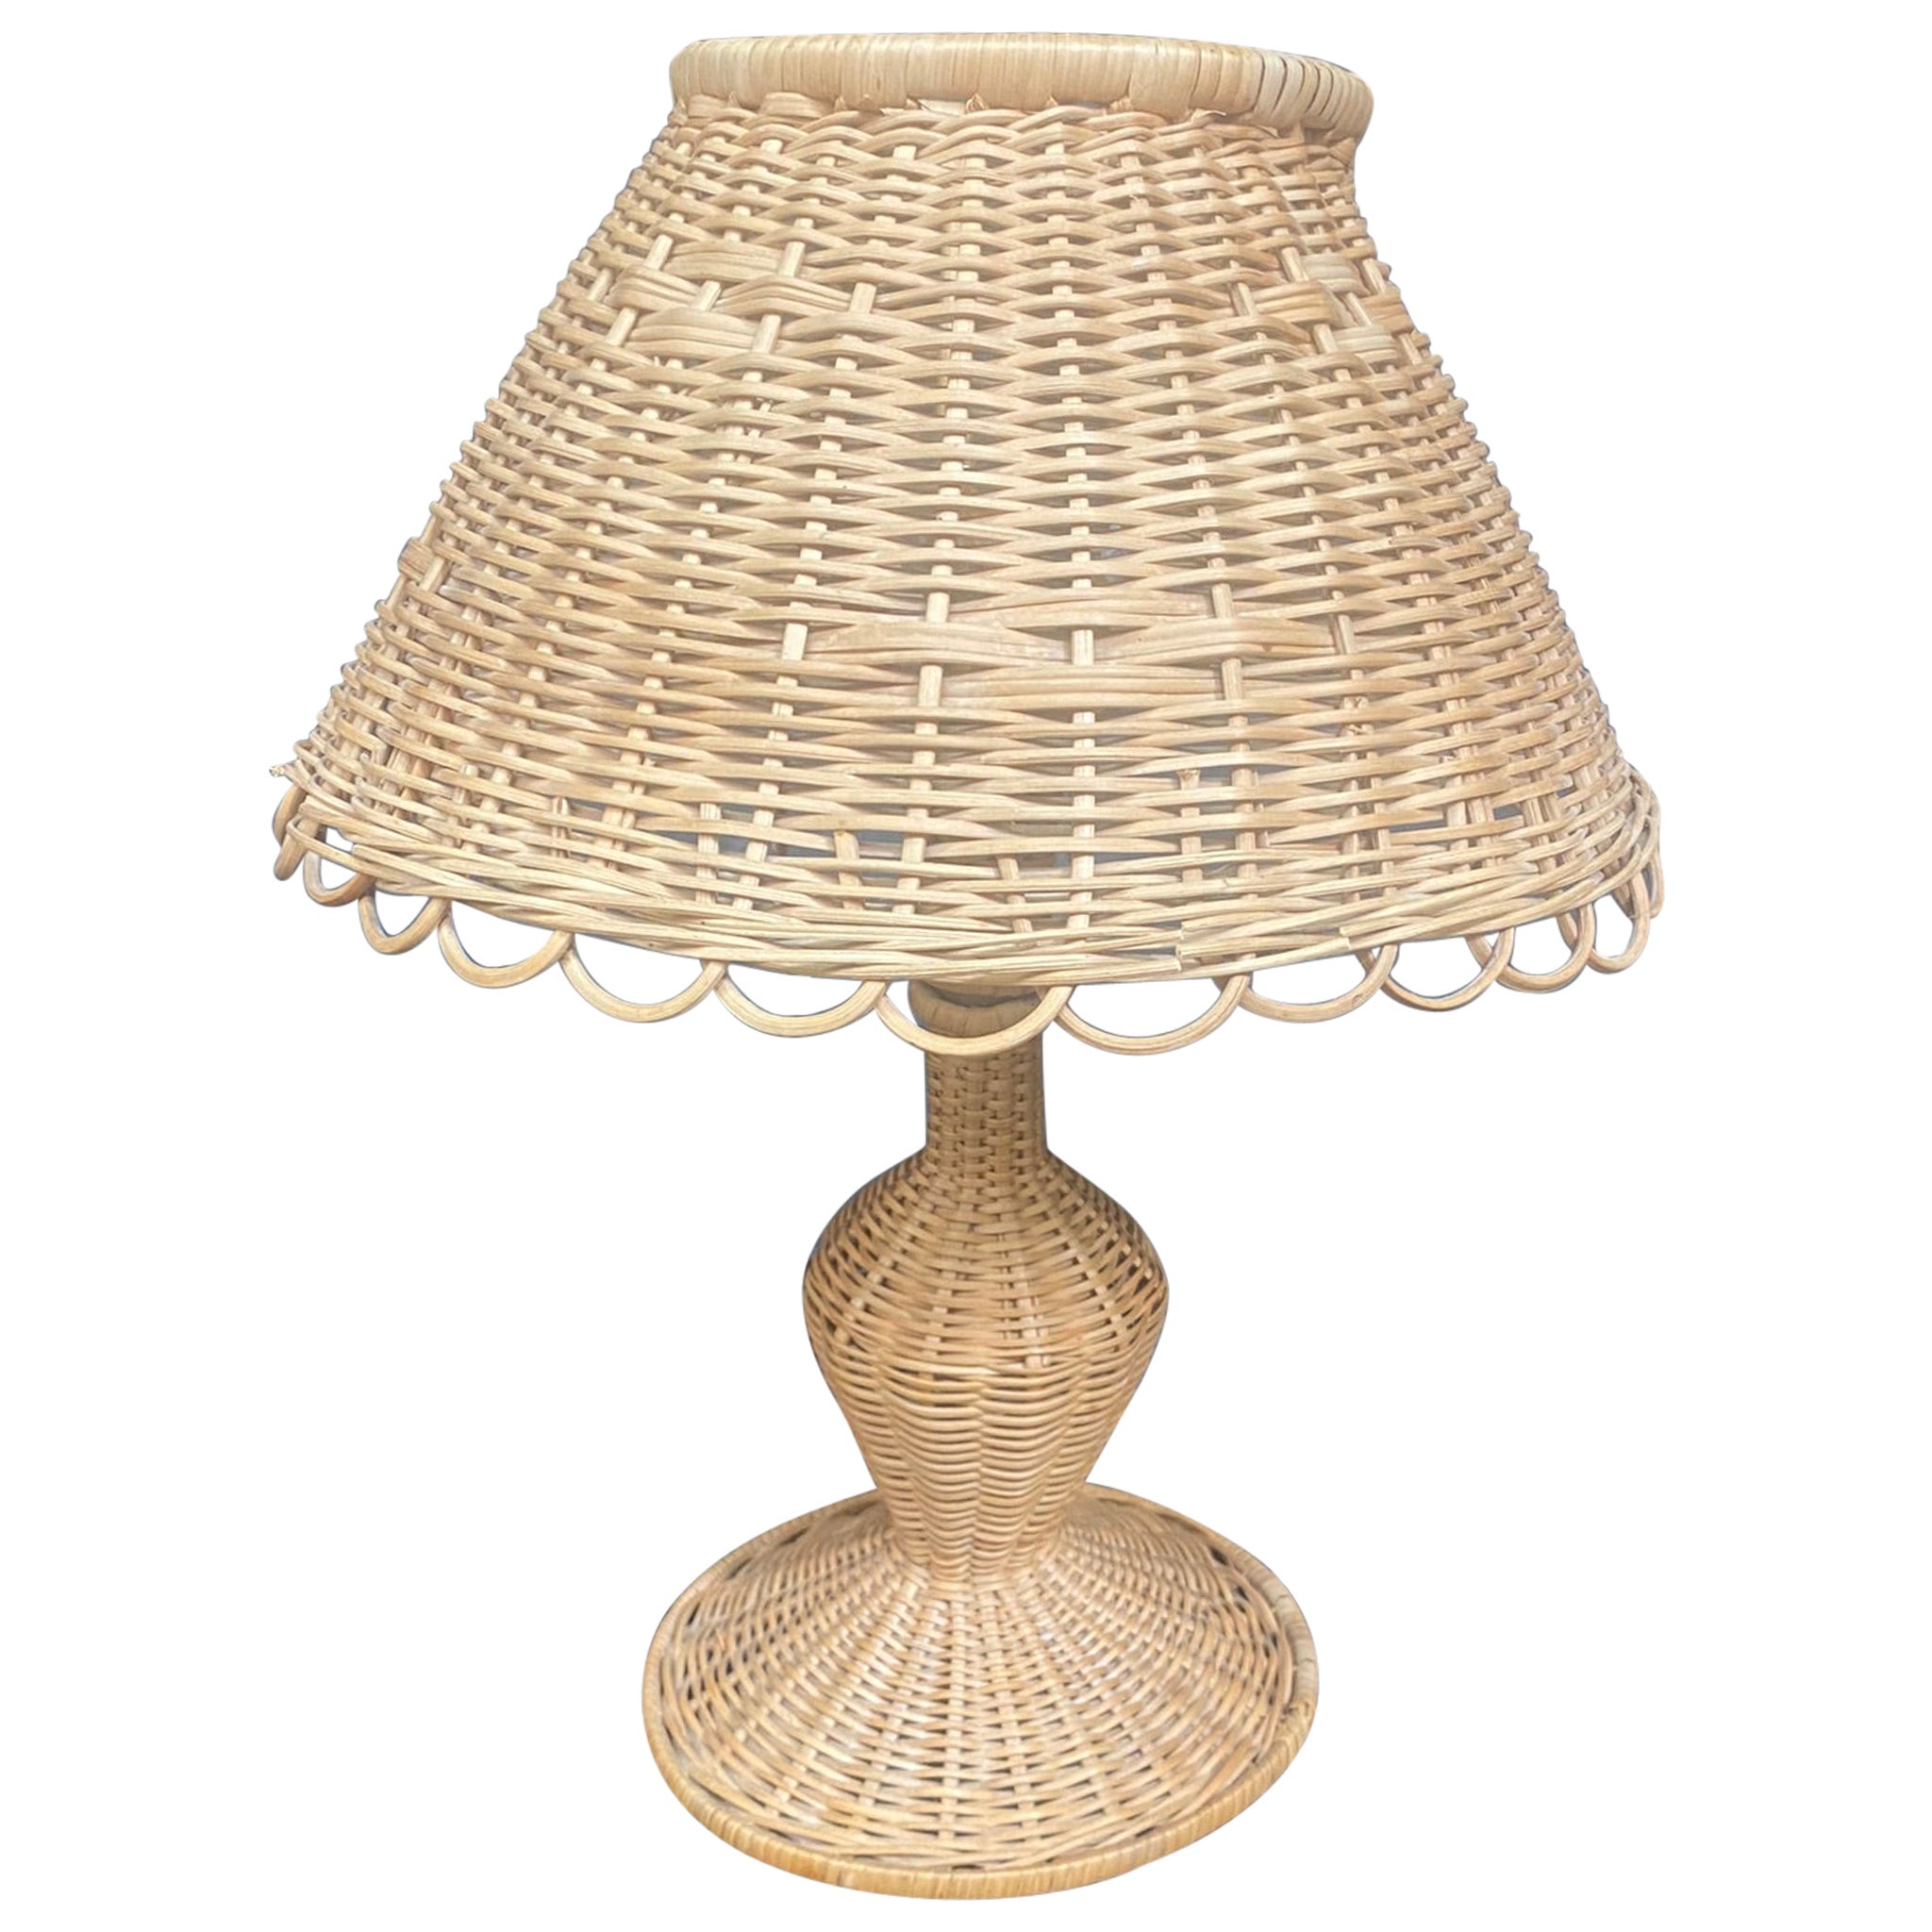 Rattan and Bamboo Lamp, circa 1950-1960